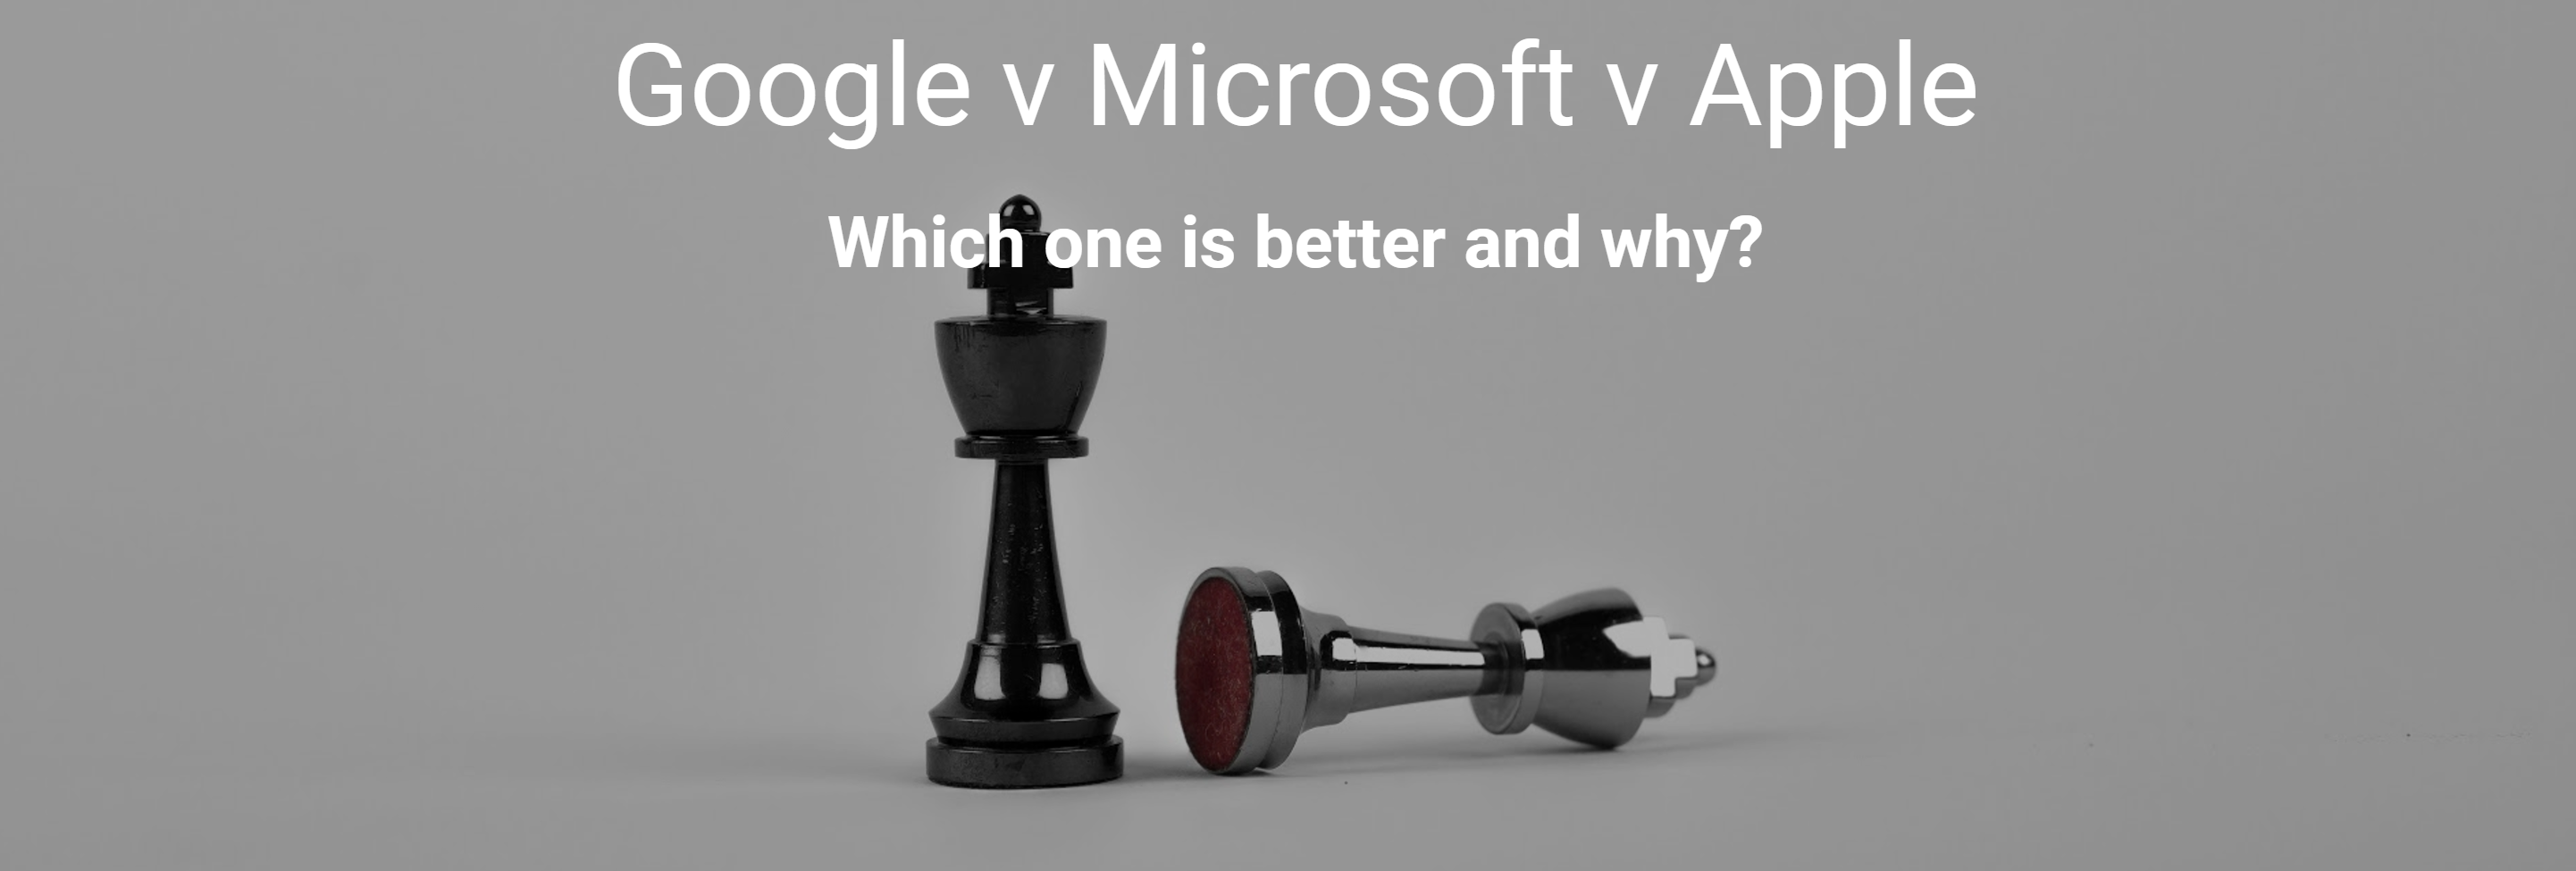 Google v Microsoft V Apple